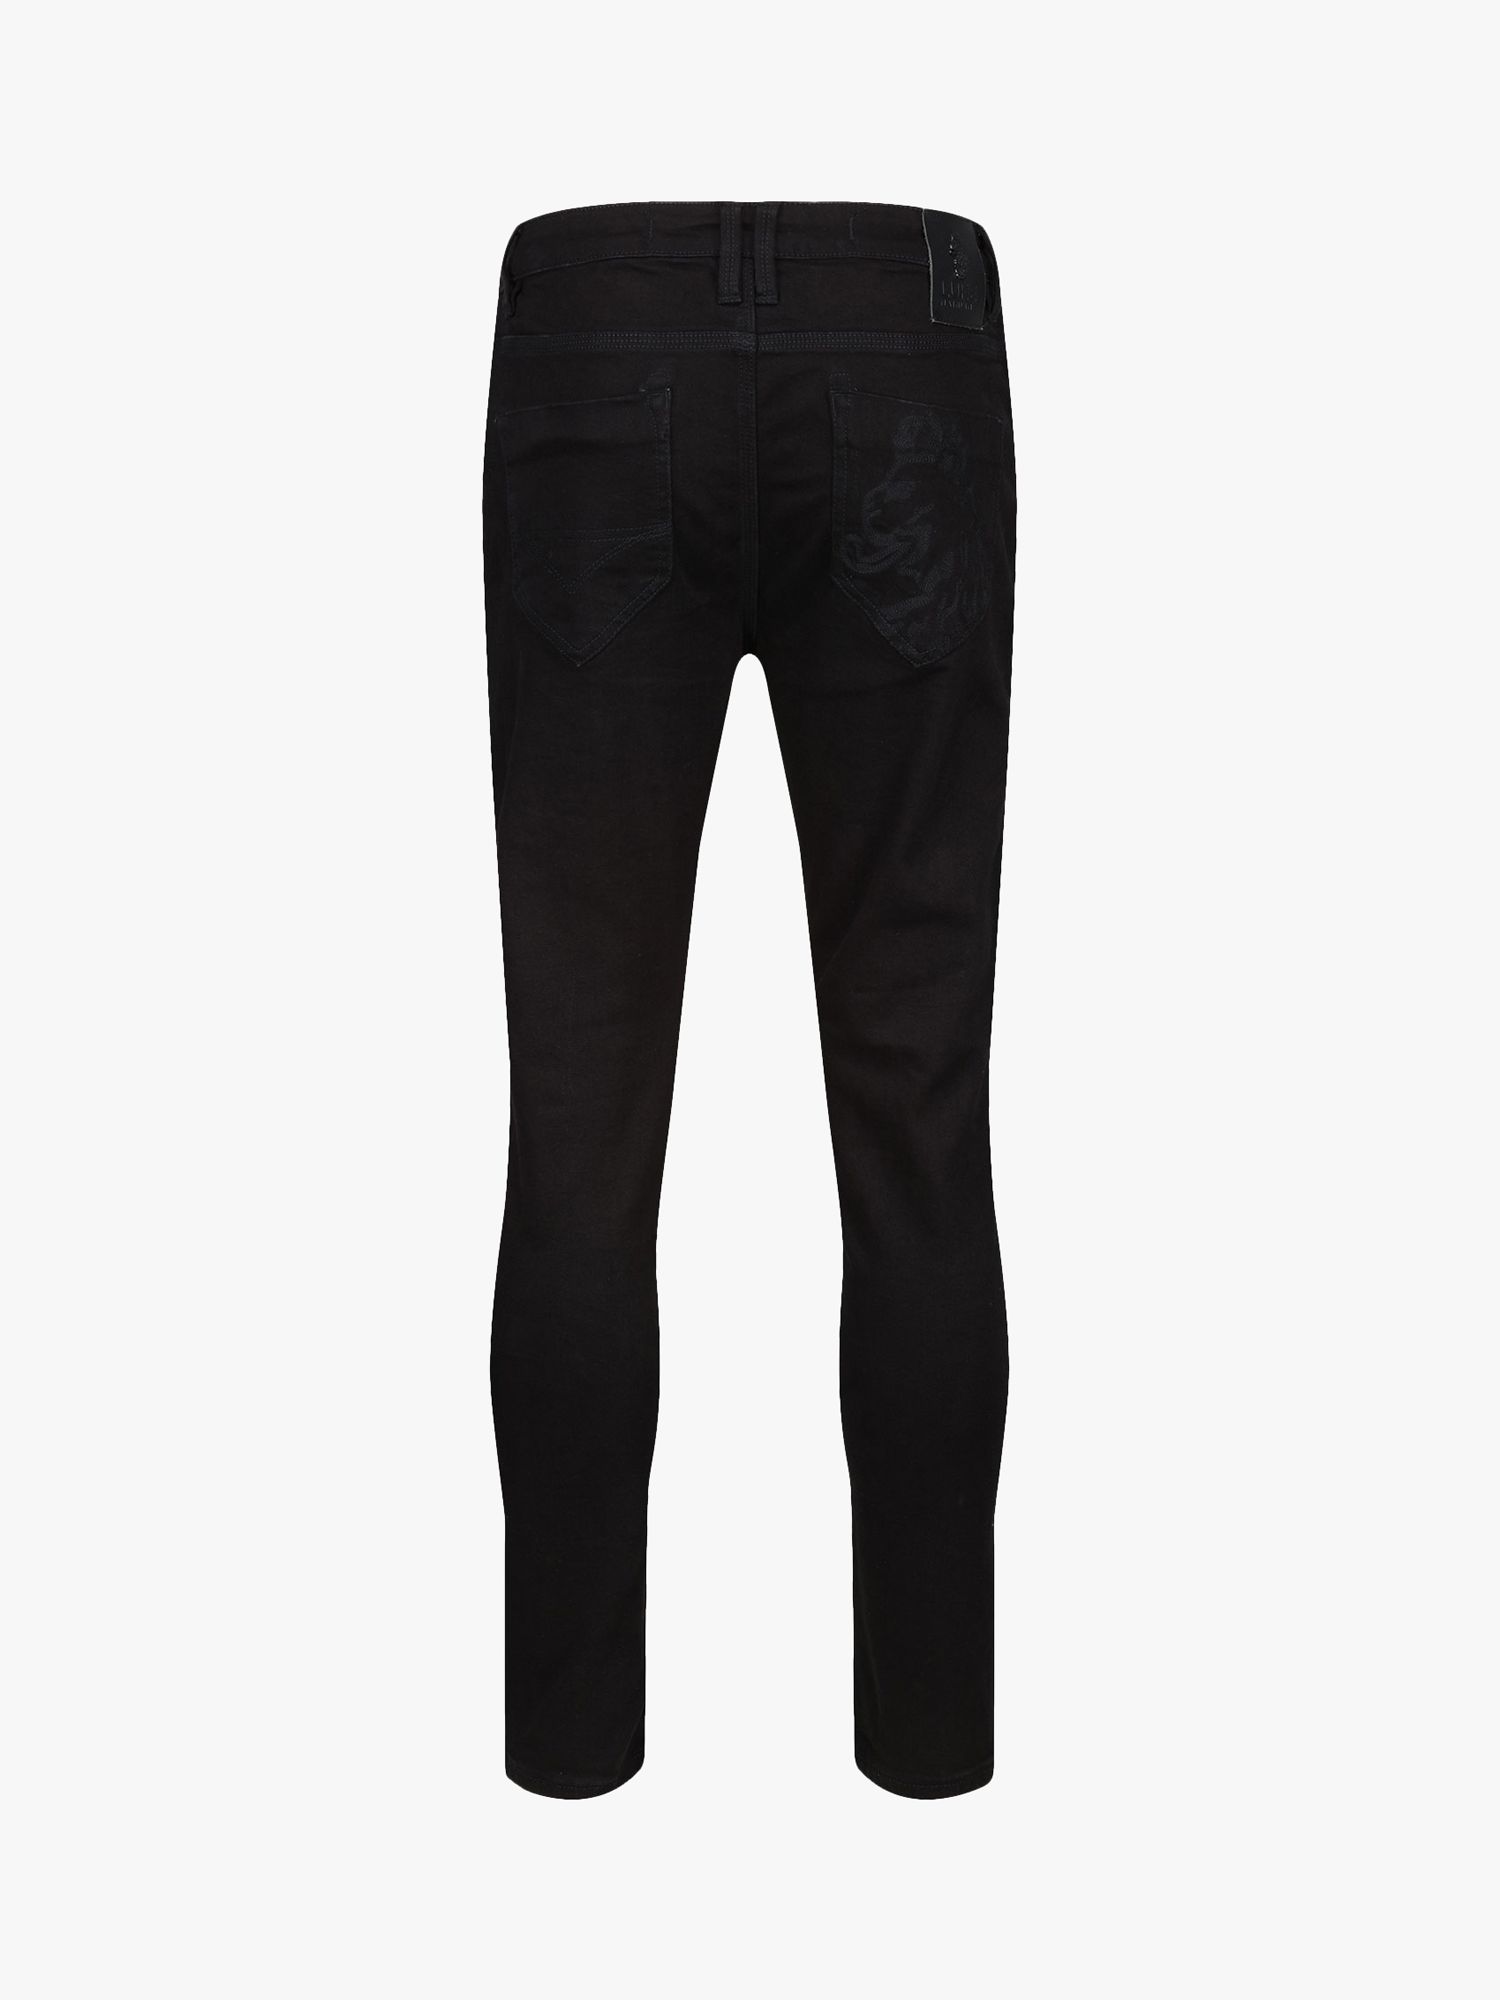 LUKE 1977 Vacuum Demin Slim Fit Jeans, Black Worn, 28R